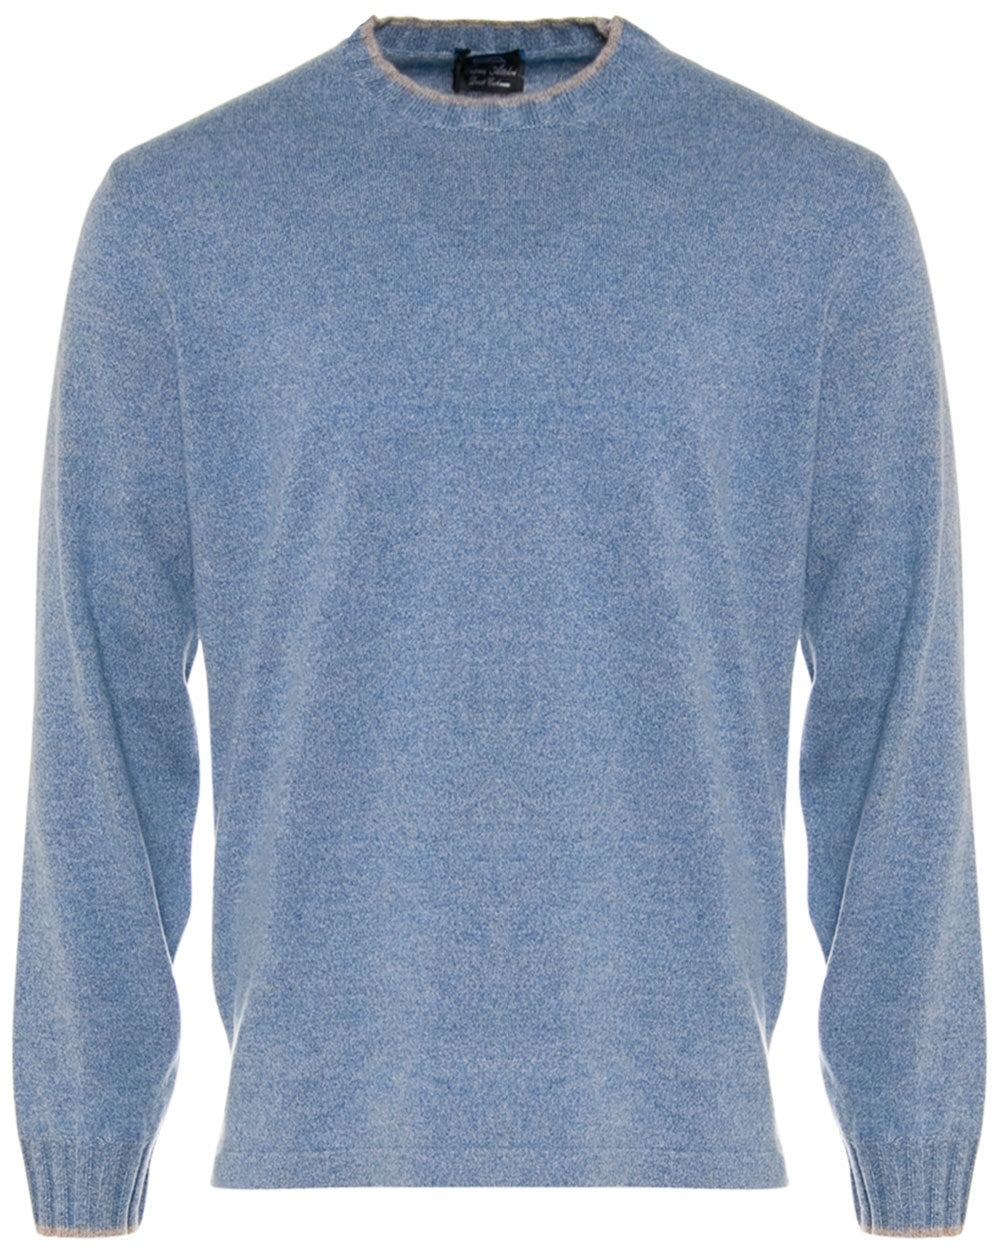 Azzurro Melange Cashmere Sweater